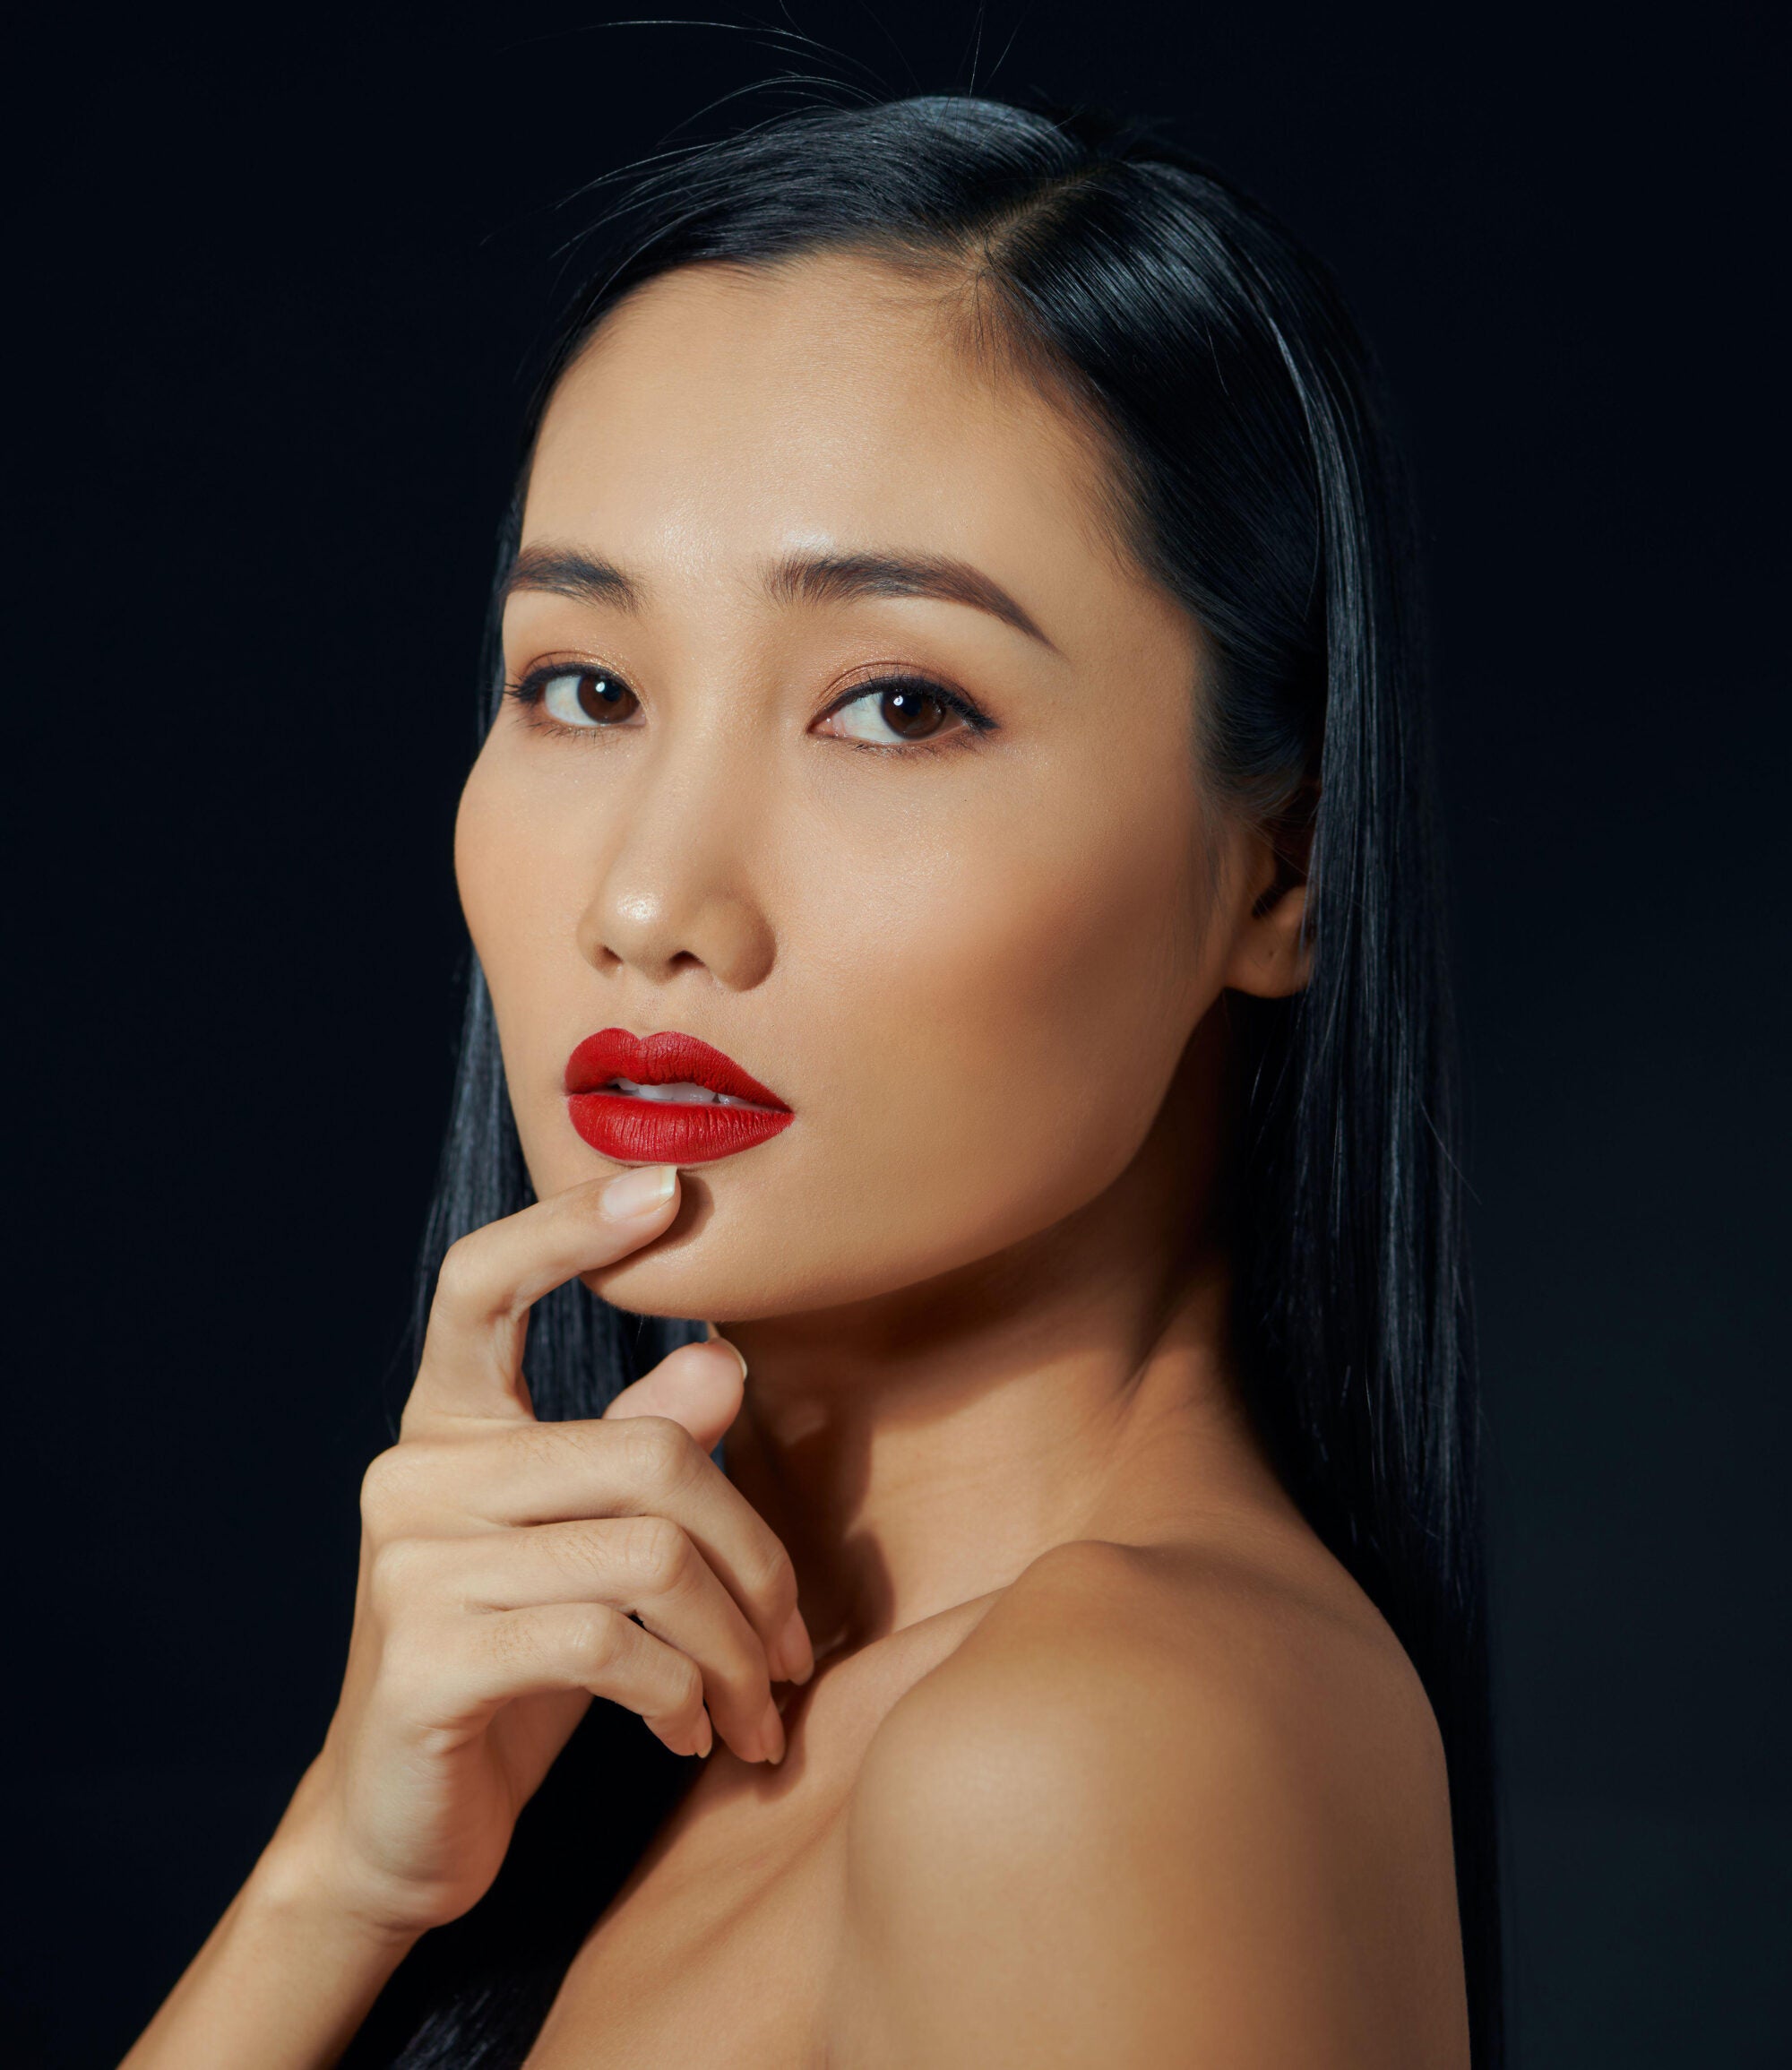 Asian woman wearing red lipstick